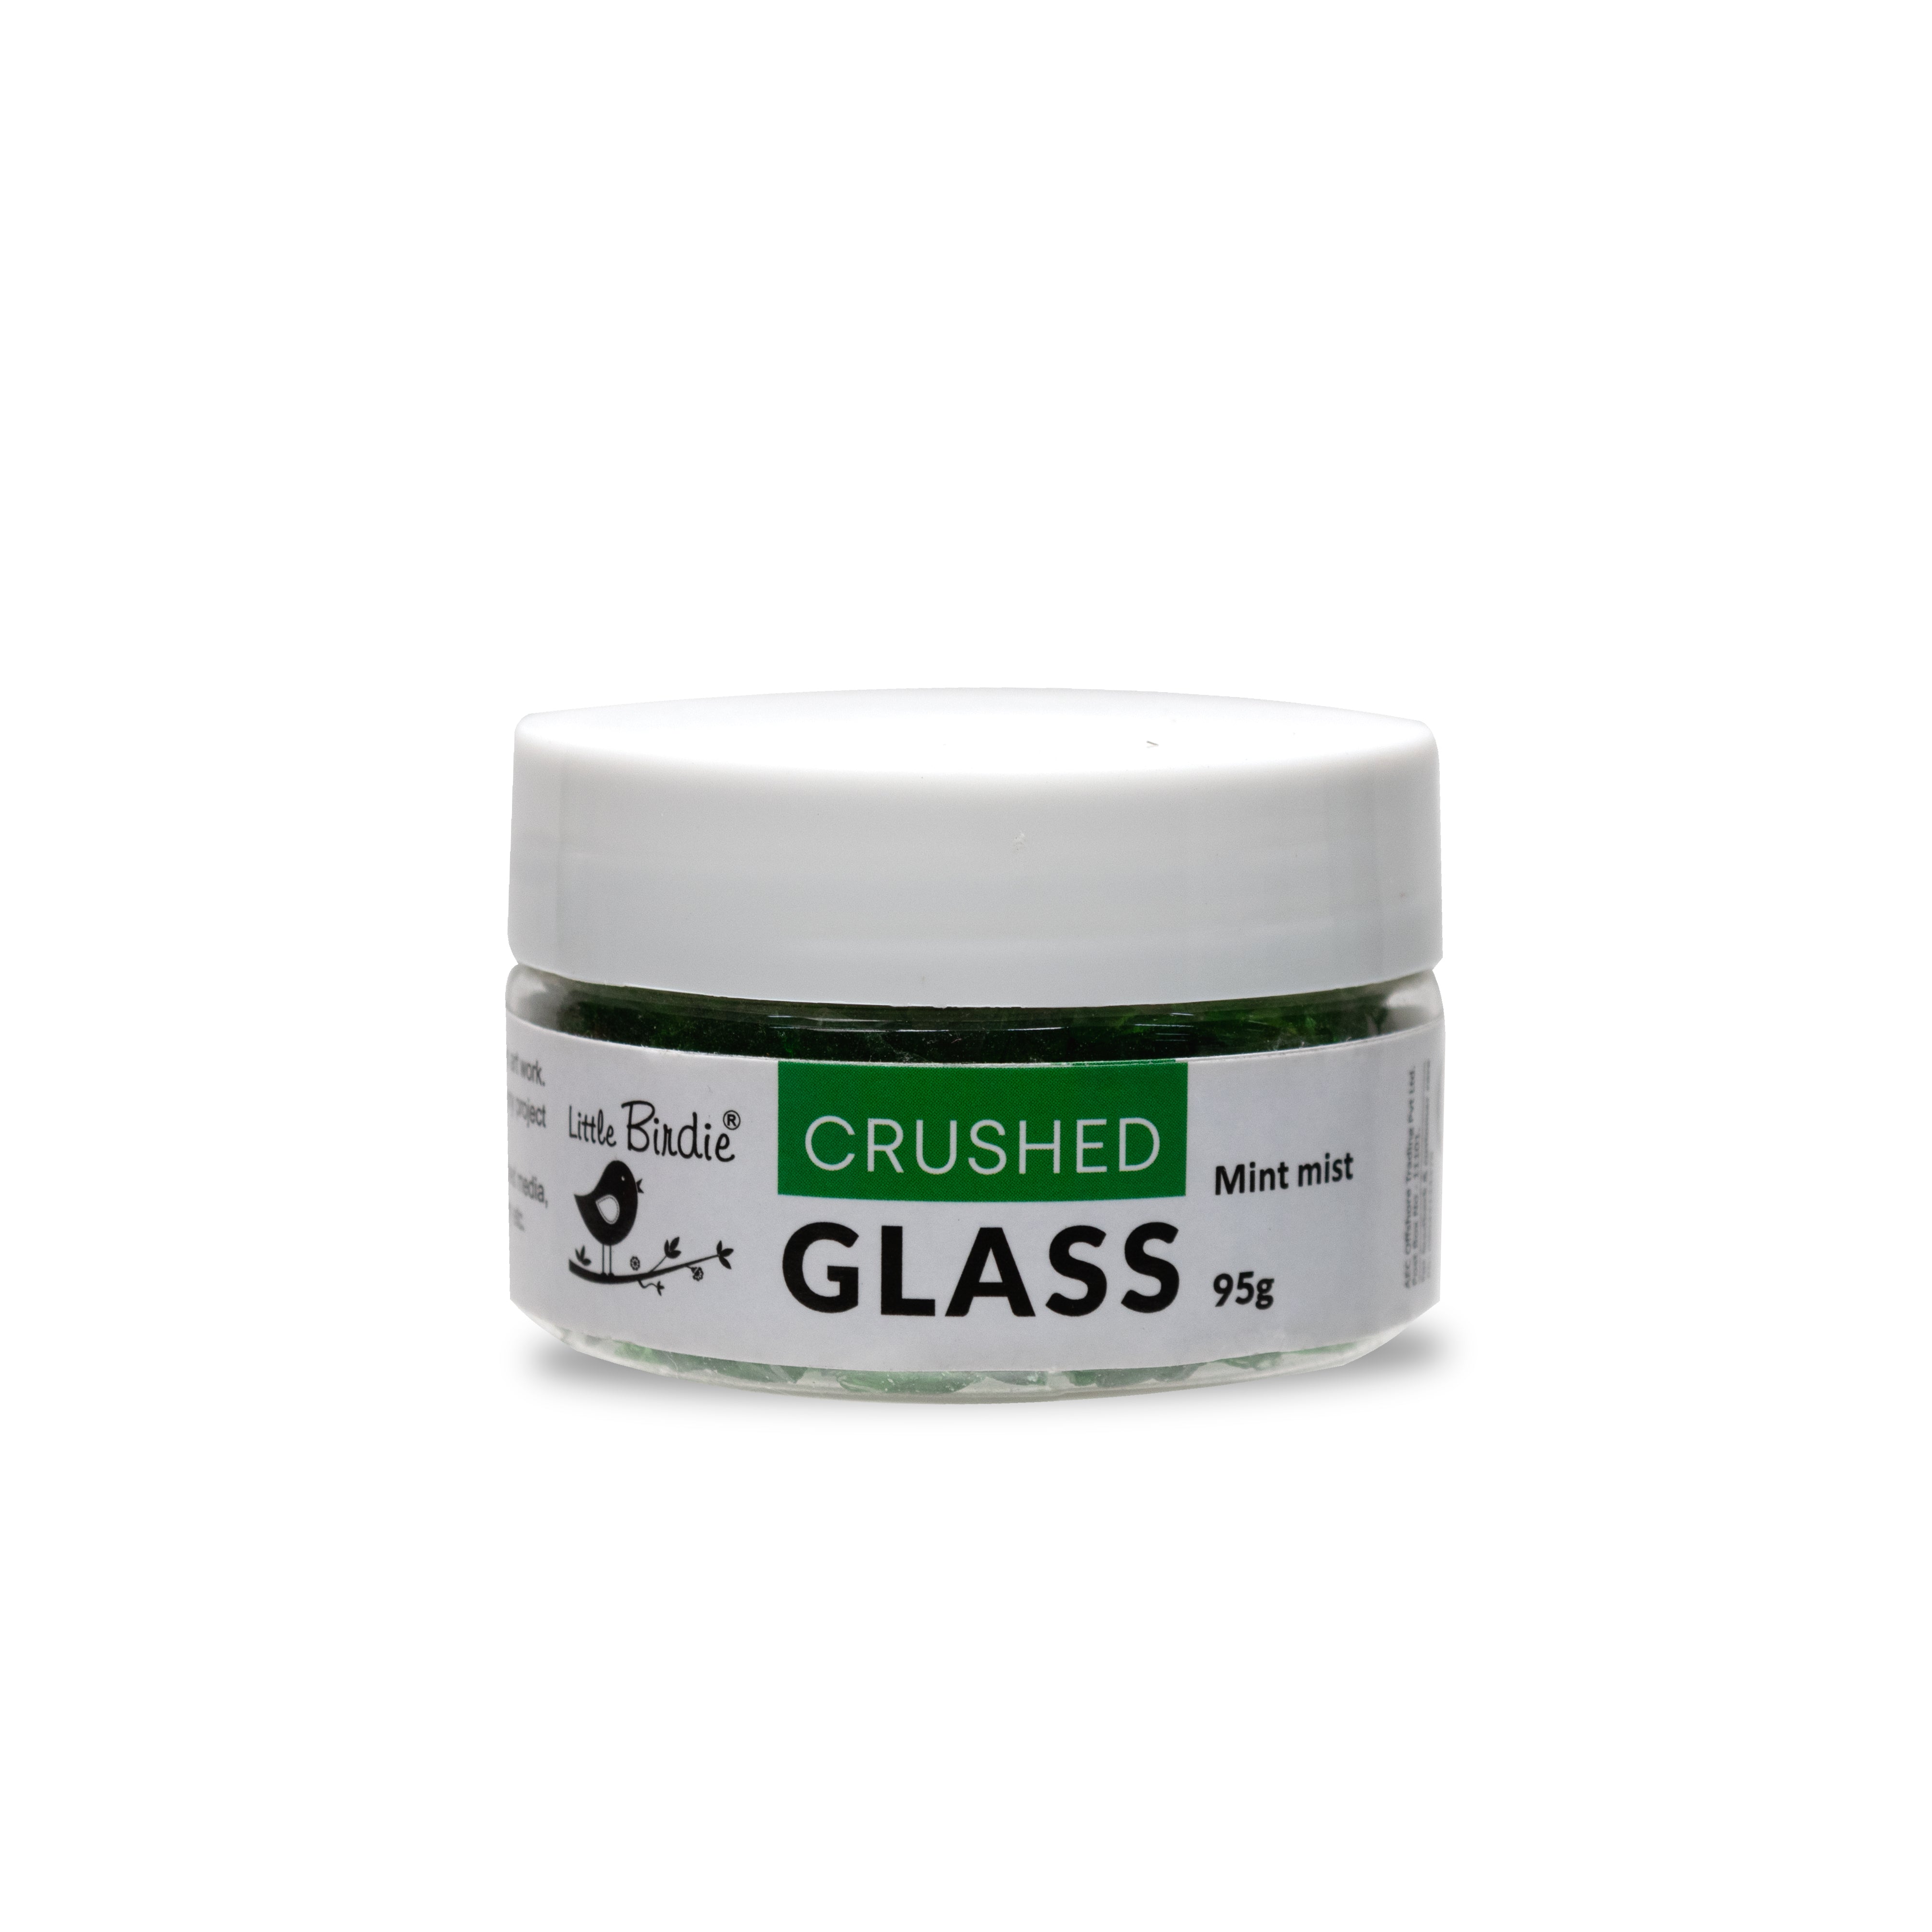 Crushed Glass Mint Mist 95G Bottle Lb